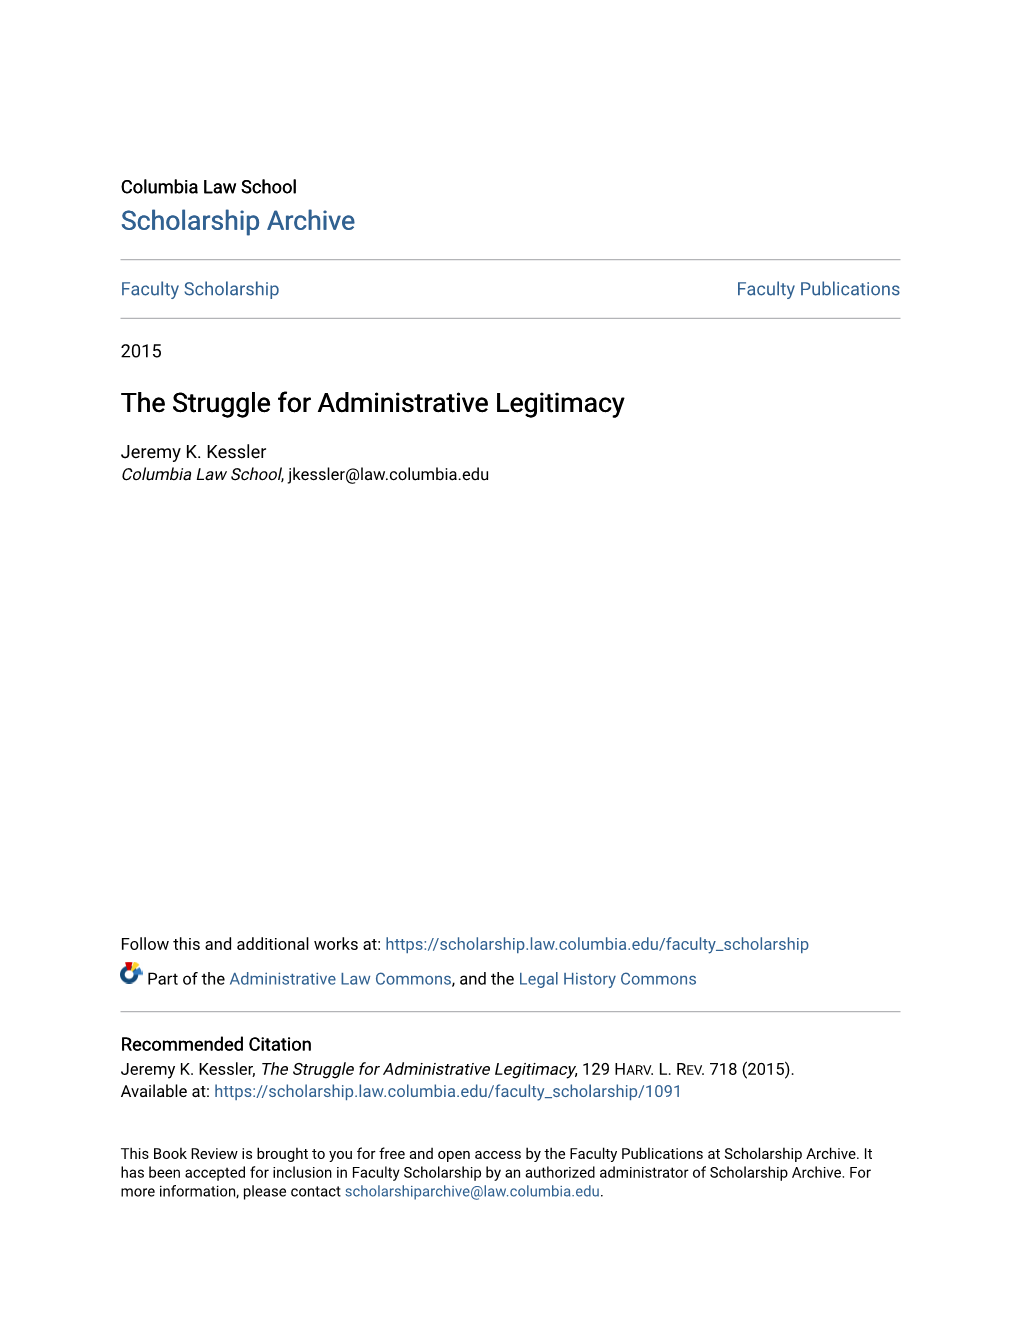 The Struggle for Administrative Legitimacy